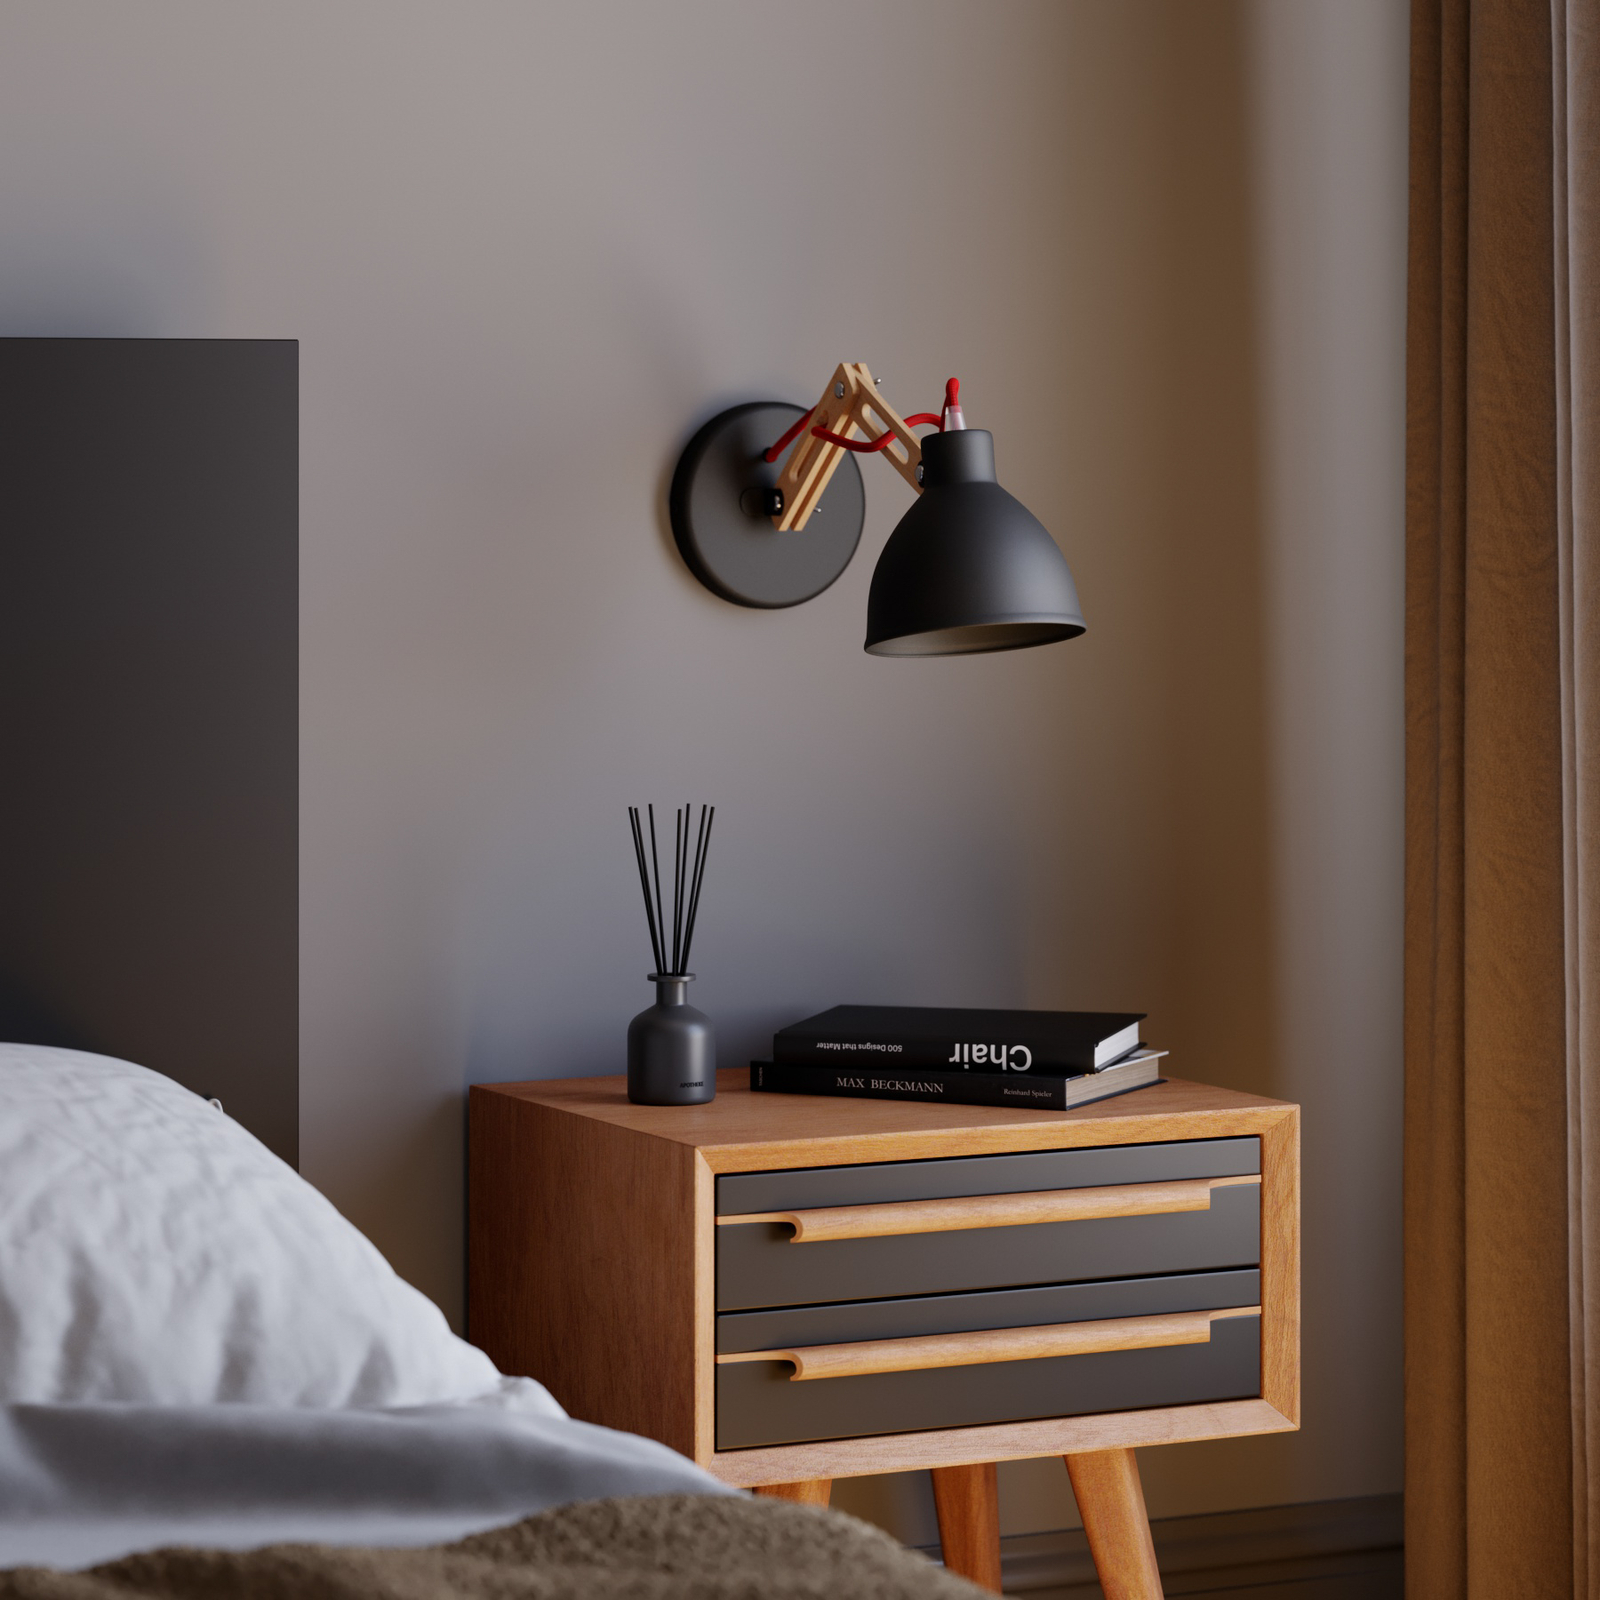 Skansen wall lamp, adjustable wooden arm, black